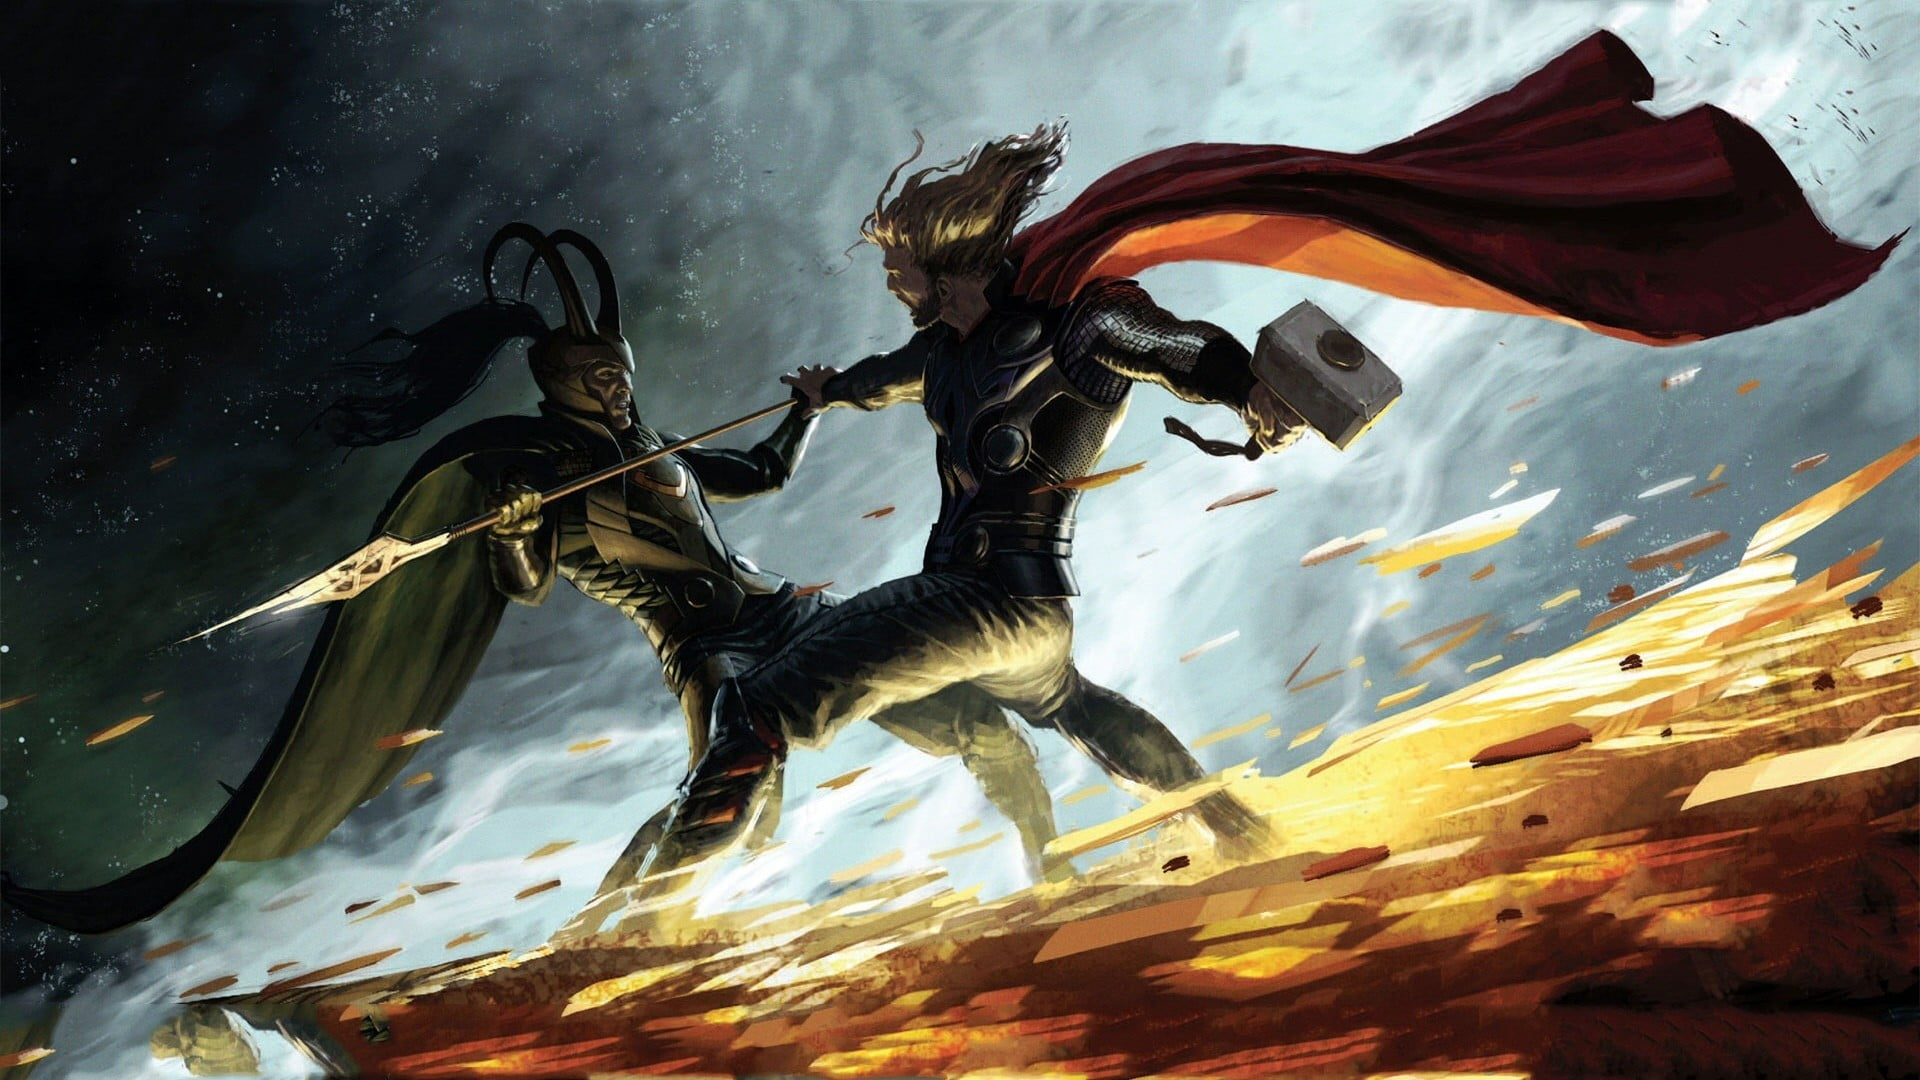 Marvel Thor vs Loki digital wallpaper, comics, Marvel Comics